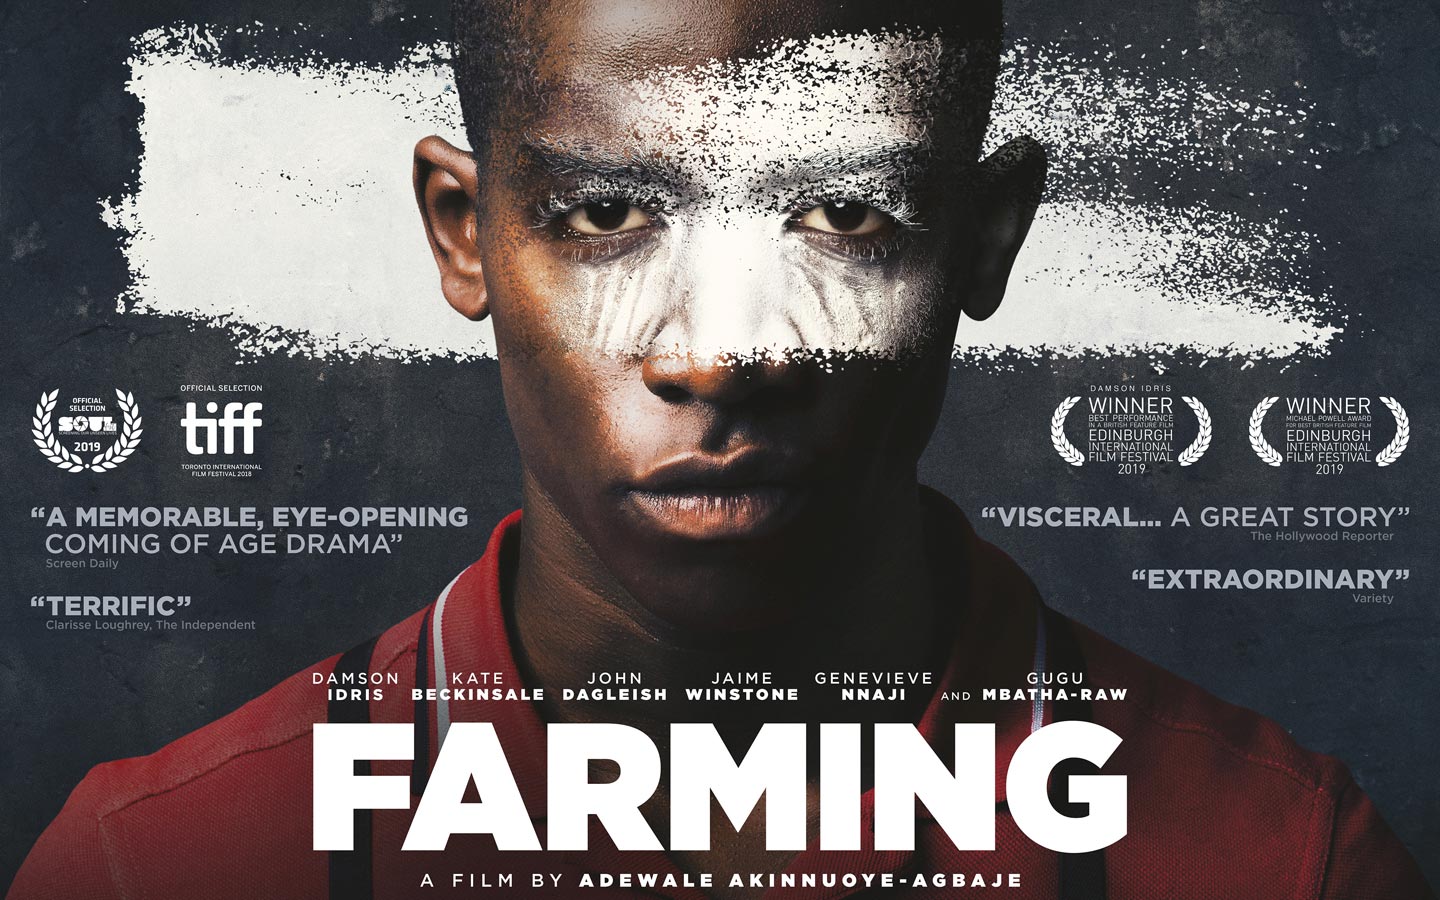 Jaime Winstone in ‘Farming’